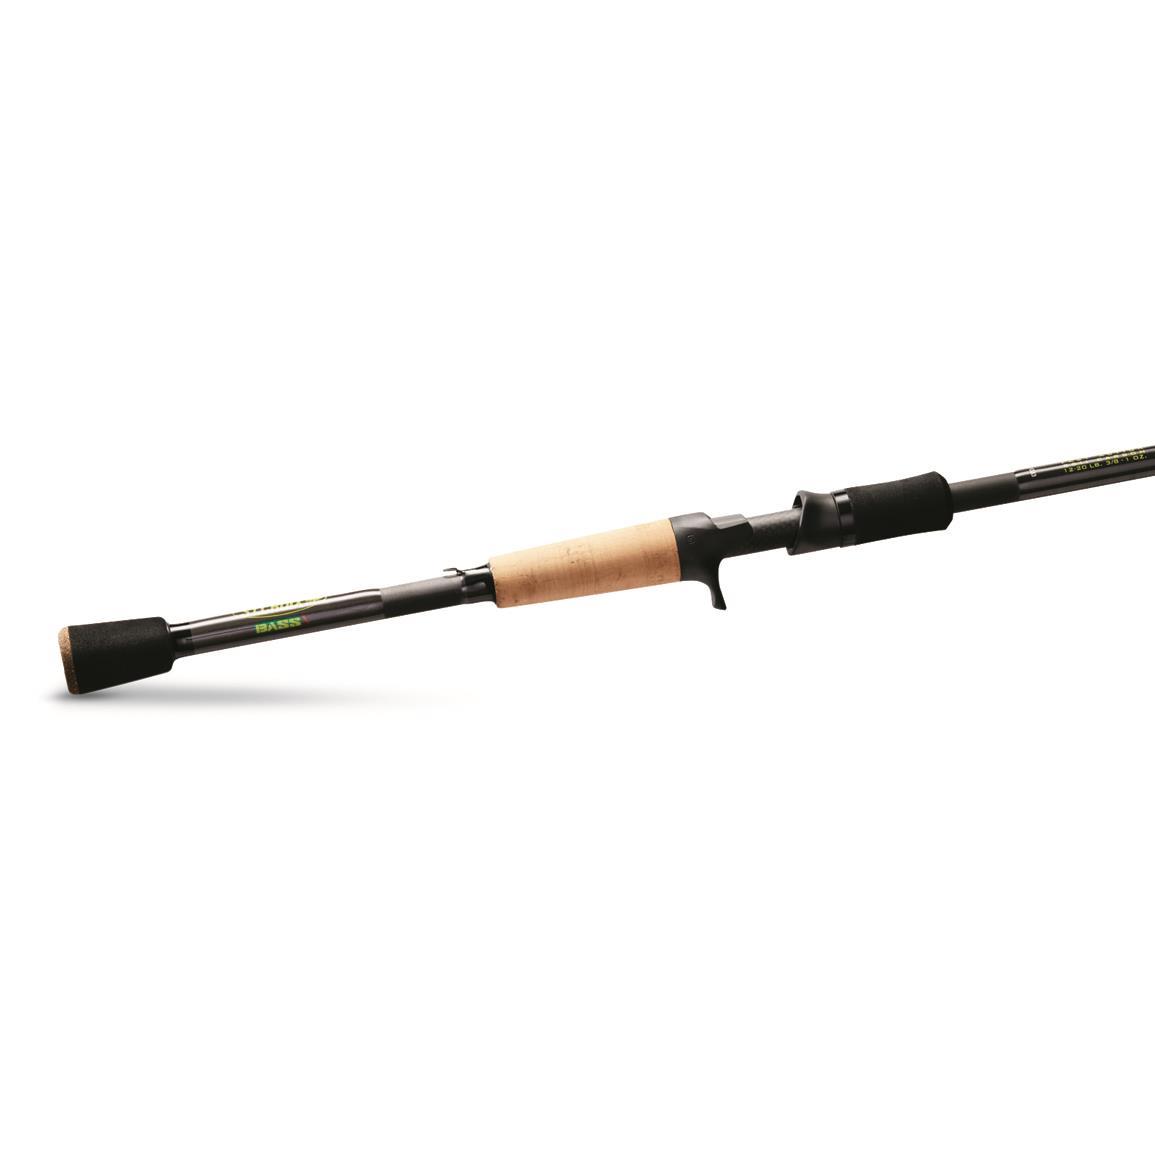 St. Croix Bass X Casting Rod, 6'8" Length, Medium Power, Extra Fast Action